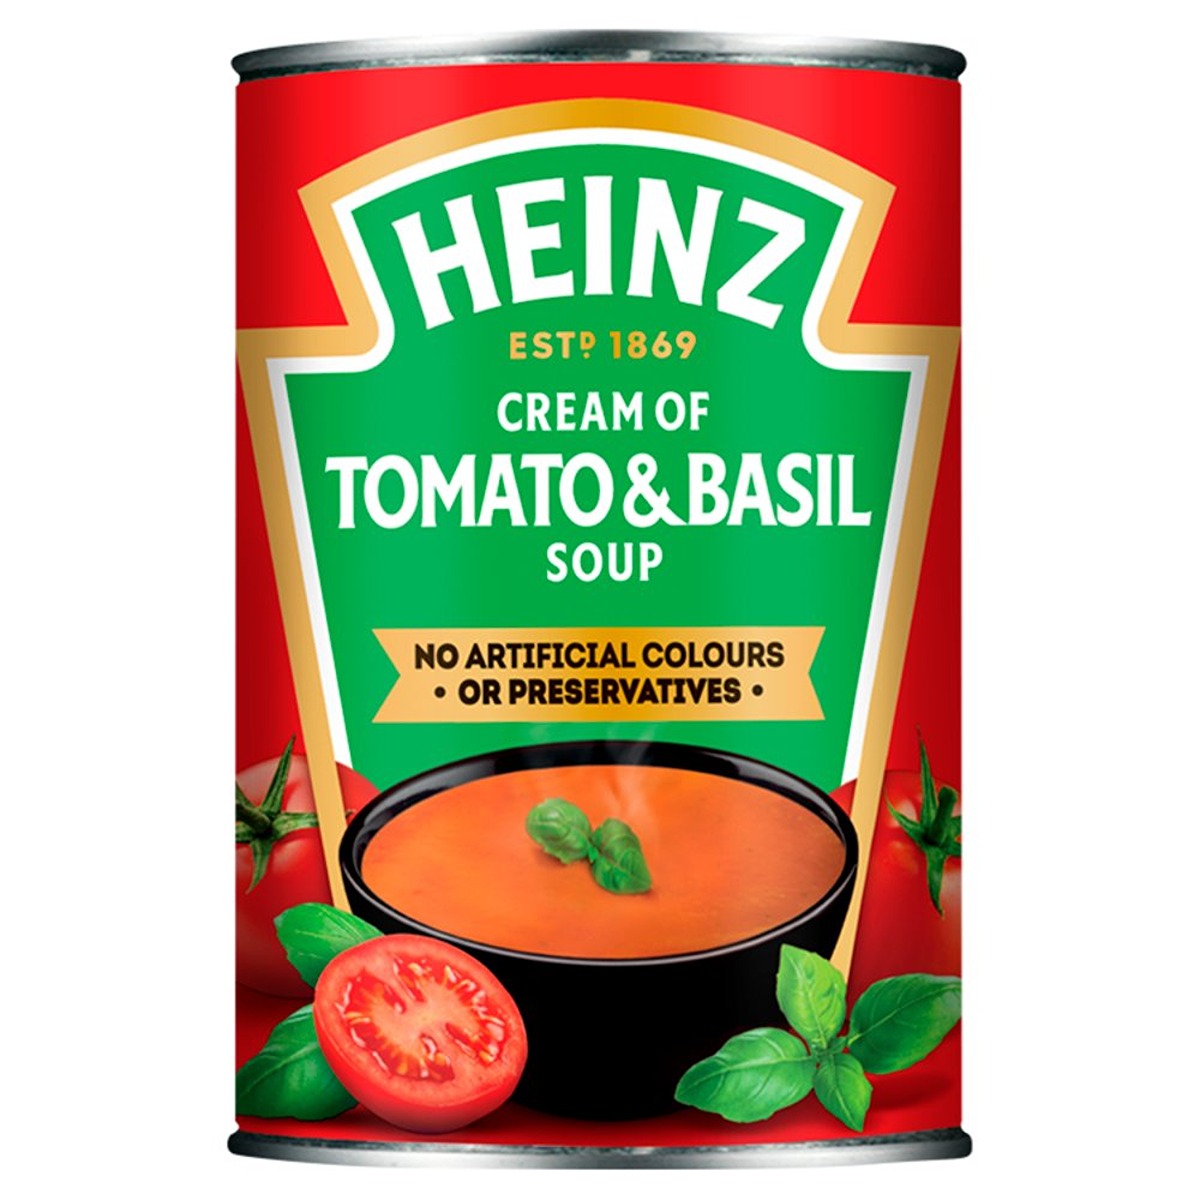 Heinz - Cream Of Tomato & Basil Soup - 400g.